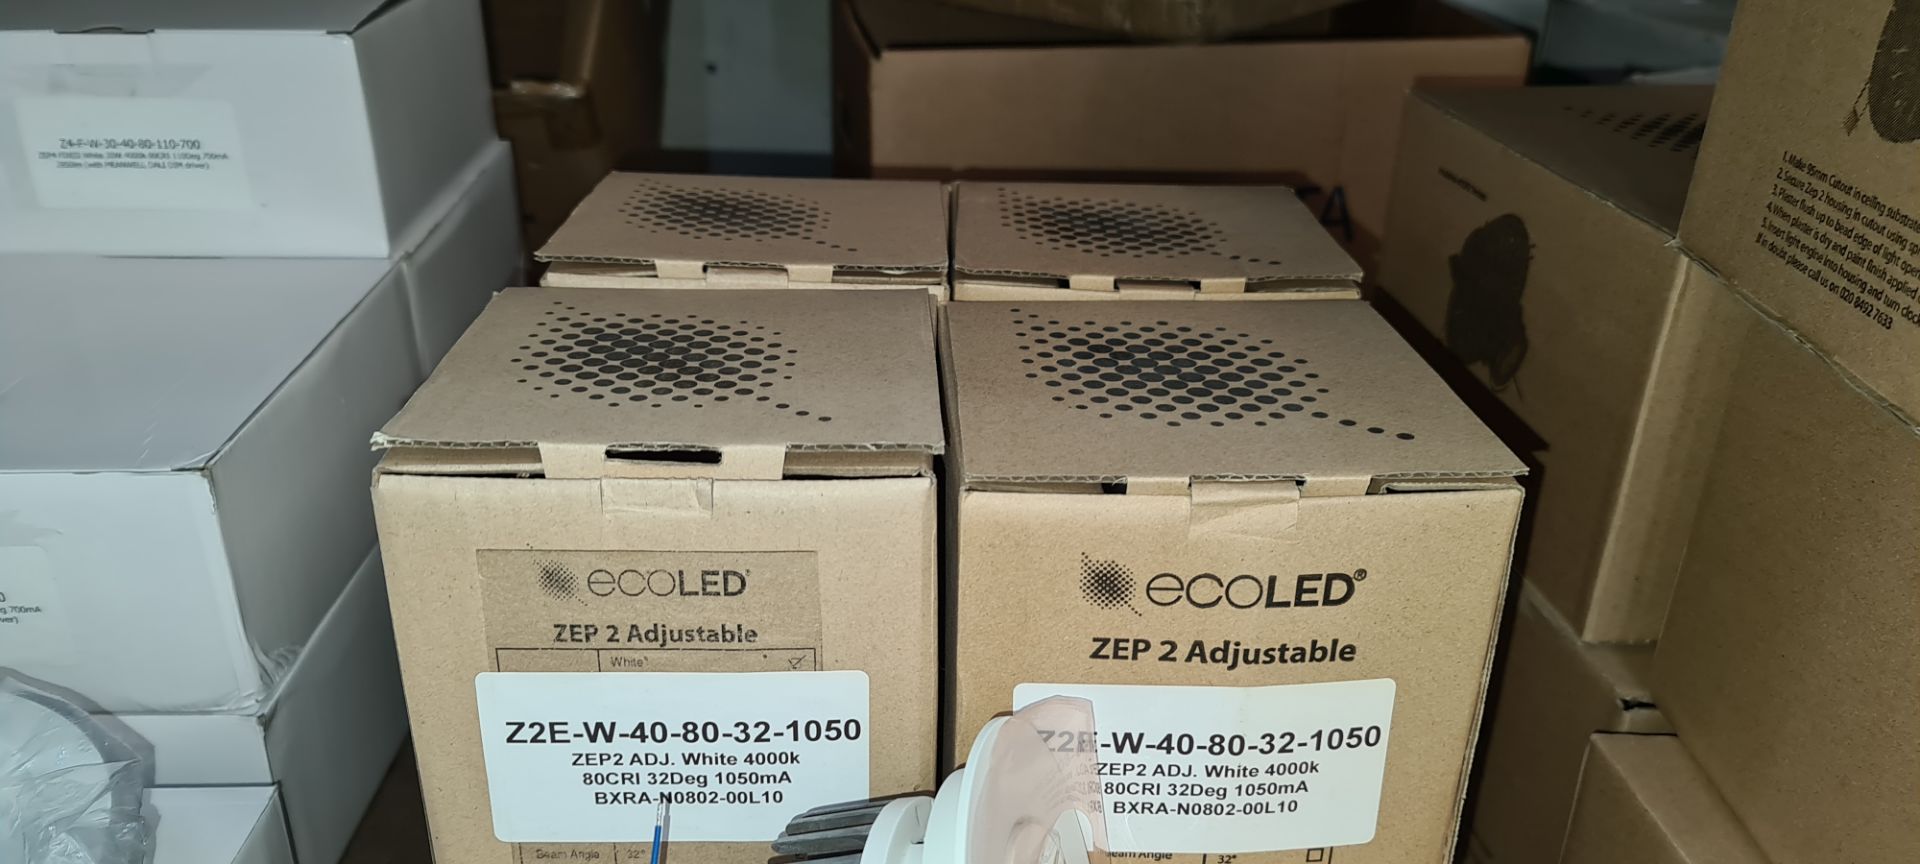 10 off EcoLED ZEP2 adjustable downlights, white, 4000K, model Z2E-W-40-80-32-1050 - Image 12 of 12